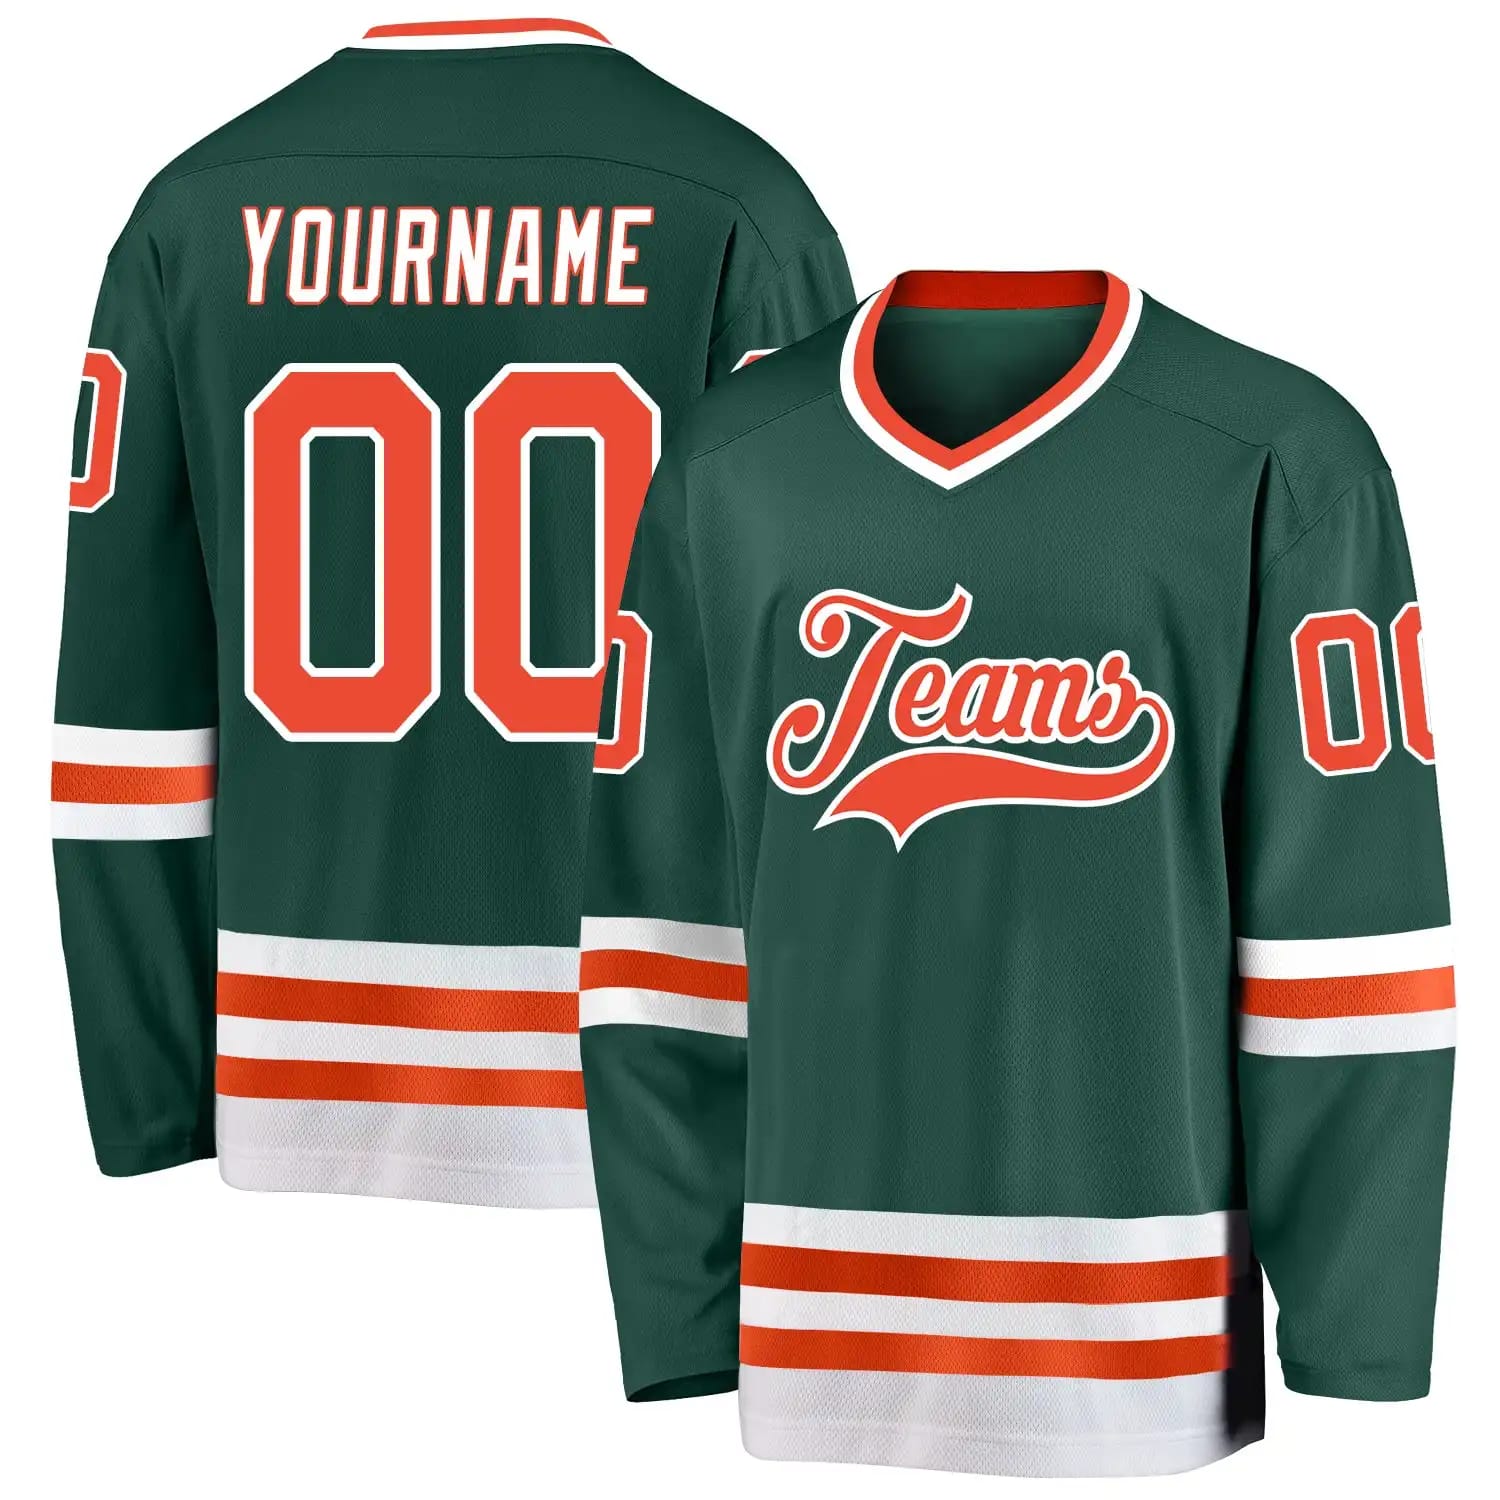 Stitched And Print Green Orange-white Hockey Jersey Custom